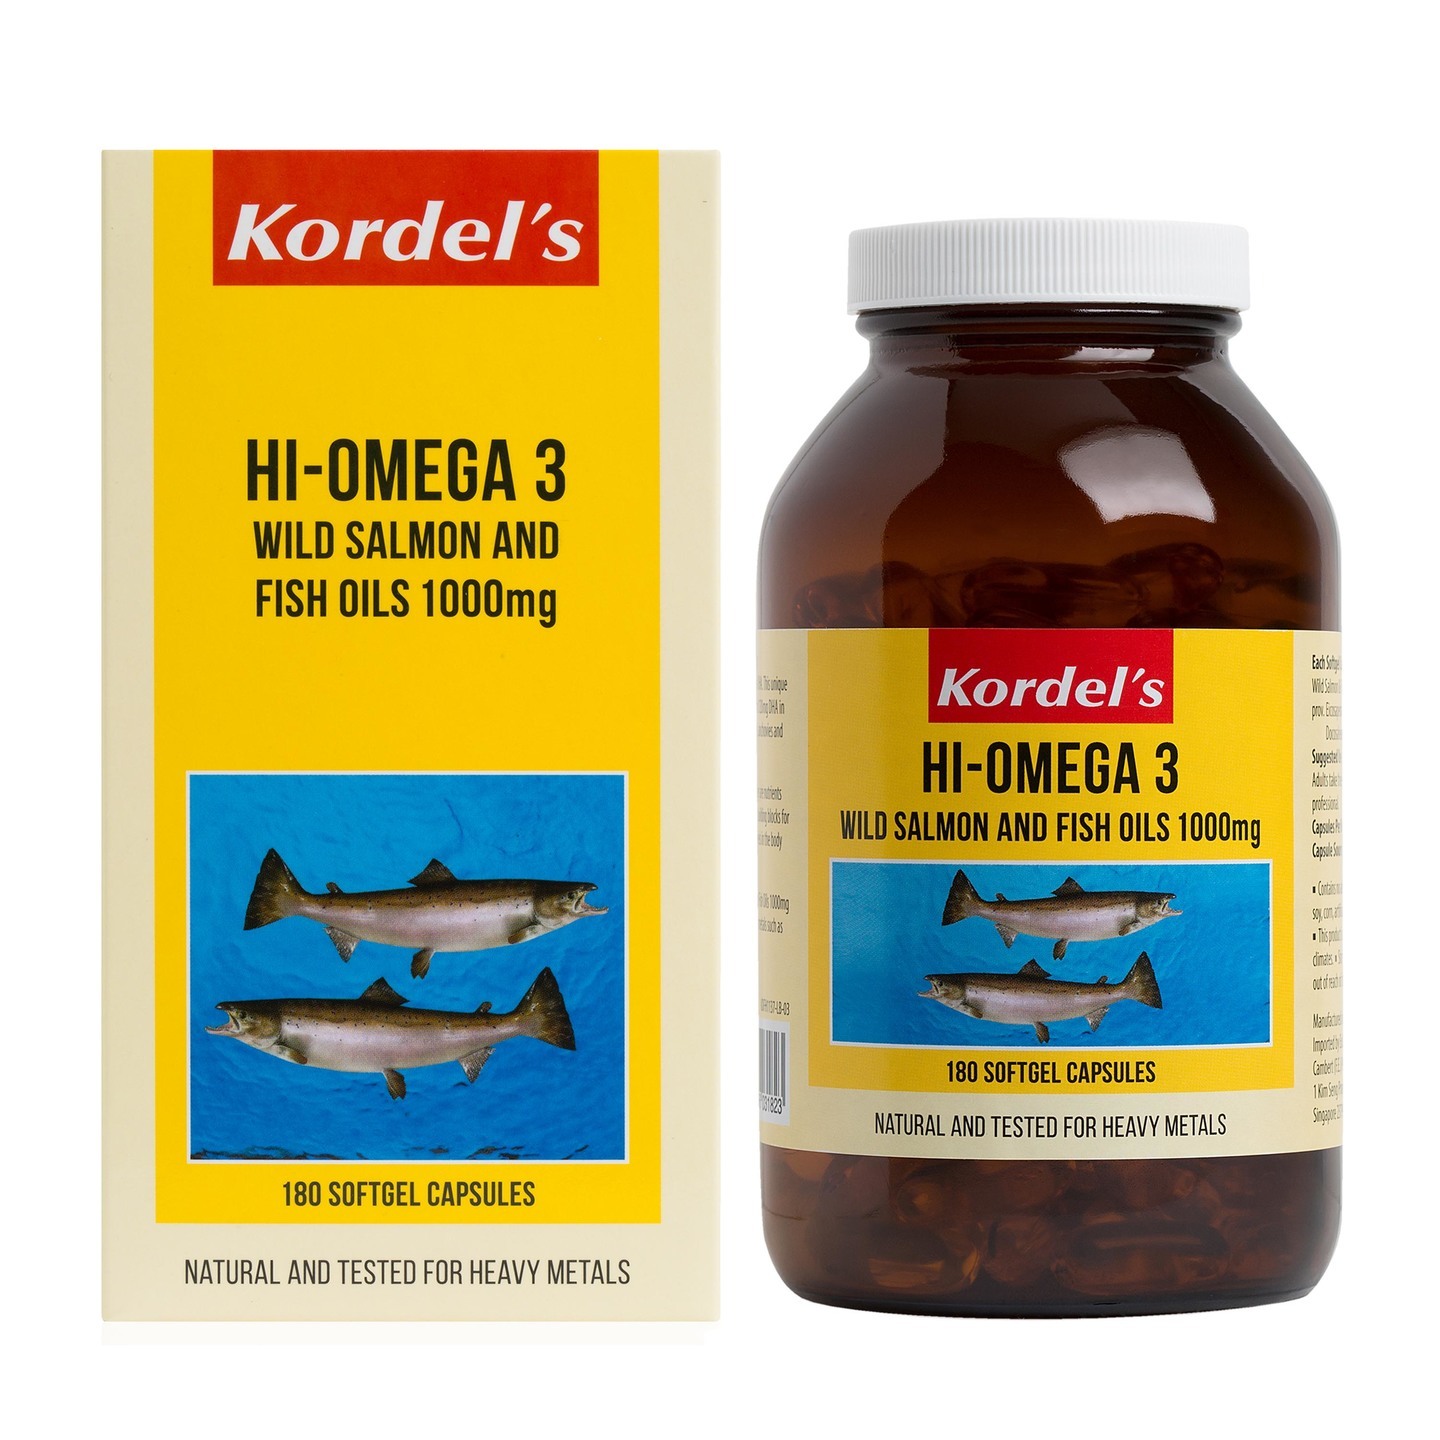 Kordels Hi- Omega 3 Wild Salmon and Fish Oils 1000mg